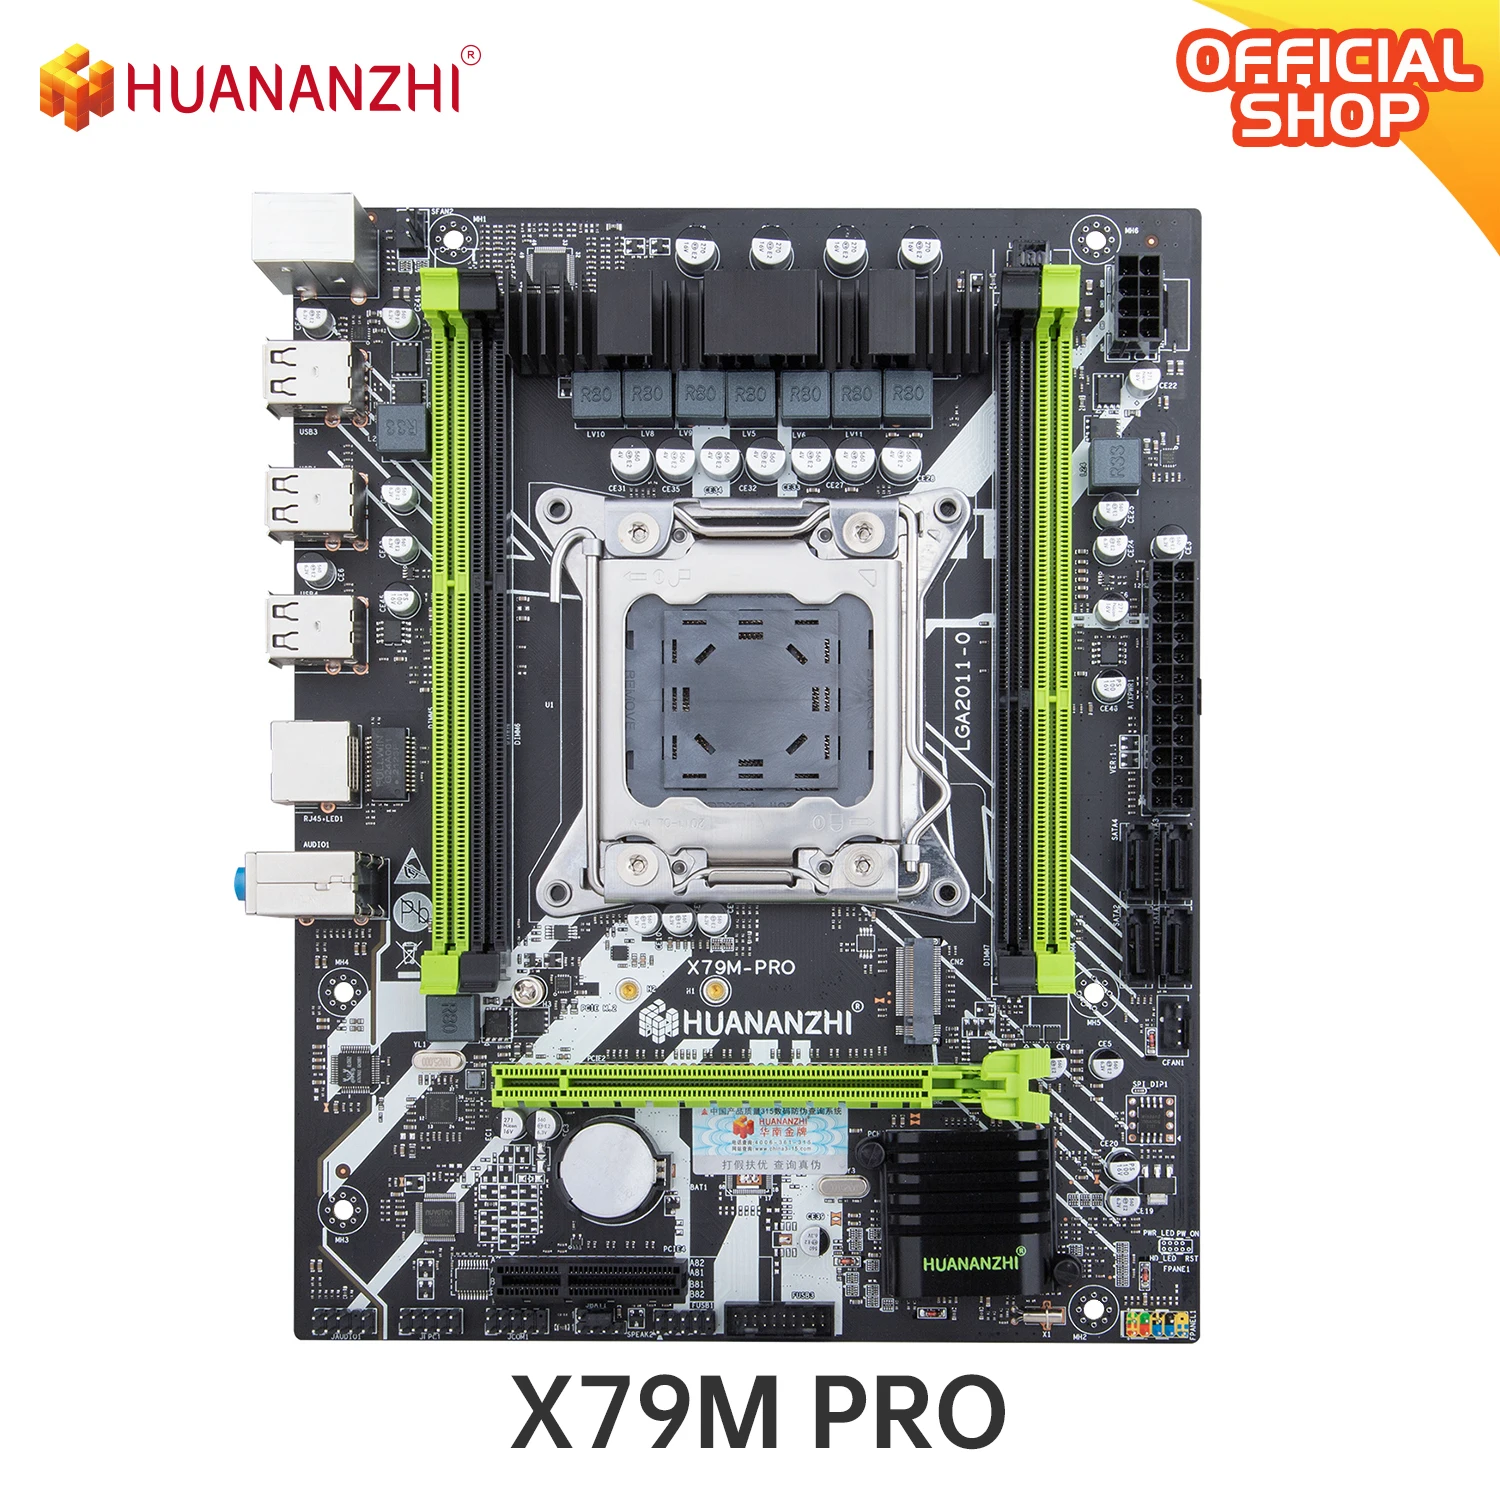   HUANANZHI X79M PRO,  Intel XEON E5 LGA2011    DDR3,   NVME, USB3.0, C2/V1/V2